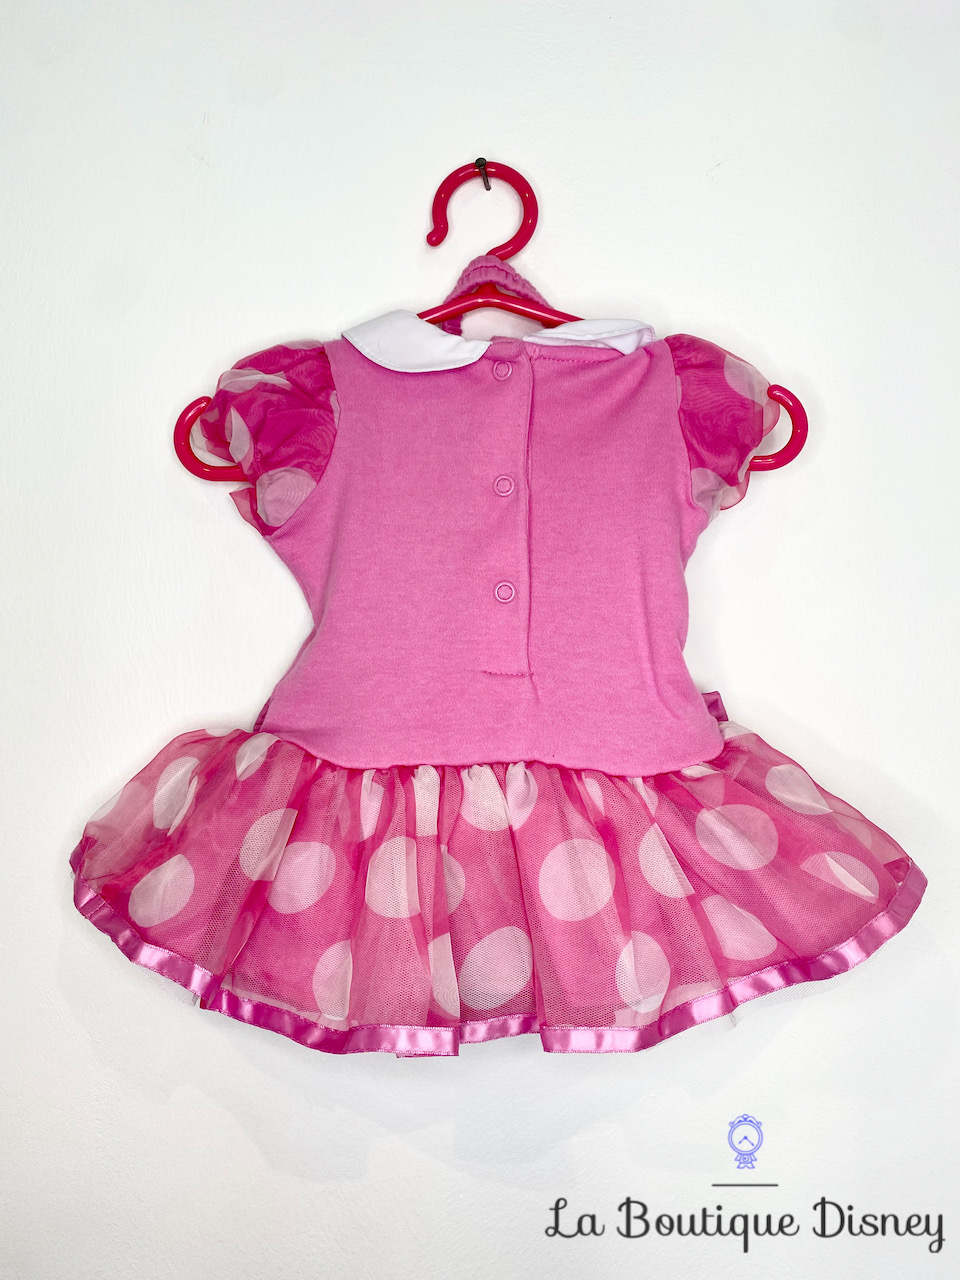 déguisement-minnie-mouse-body-disney-baby-by-disney-store-rose-pois-robe-bébé-8